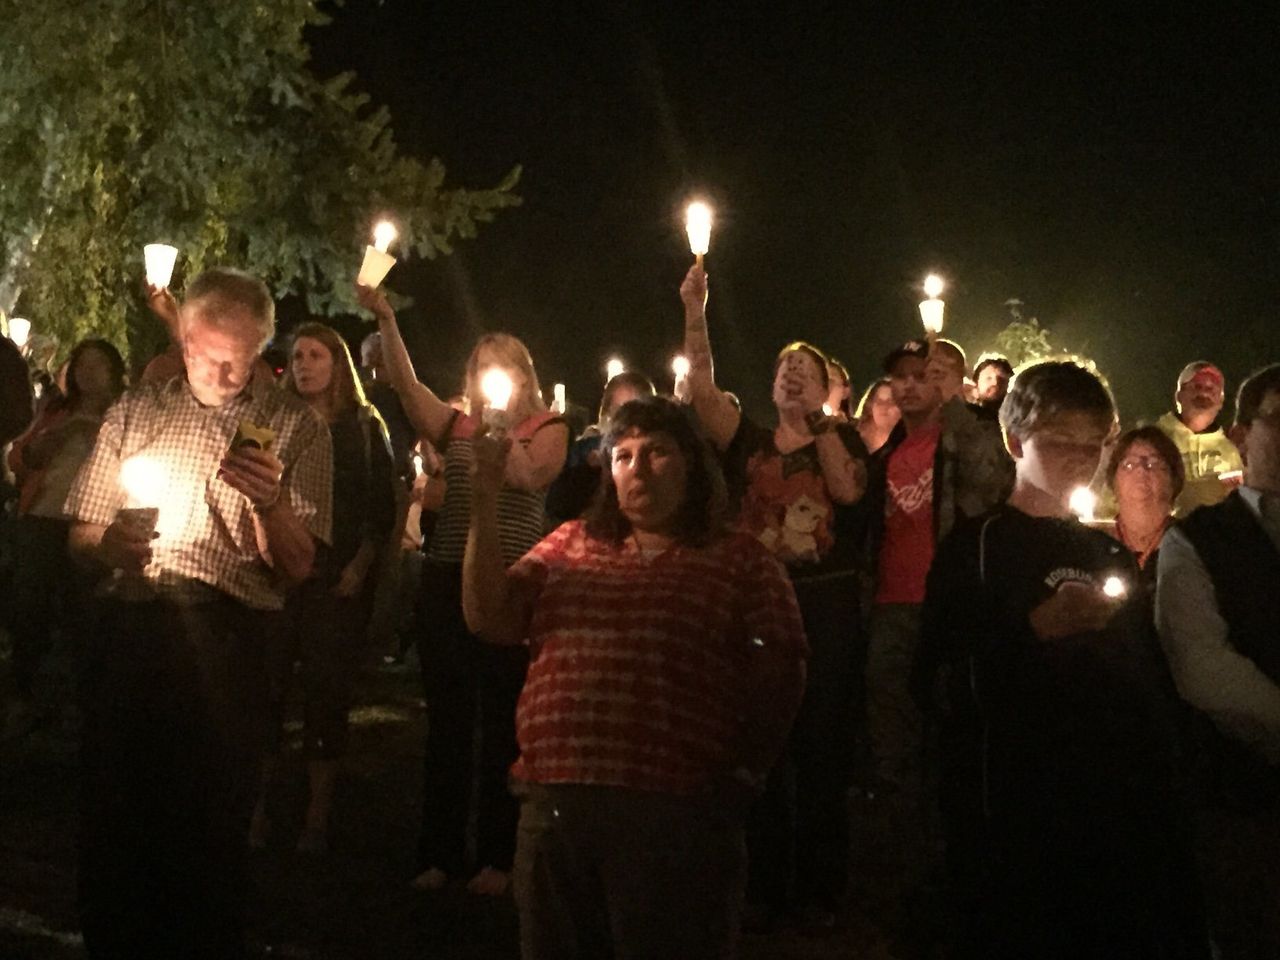 Members of the Roseburg, Oregon community gather for a vigil following a horrific shooting at Umpqua Community College.